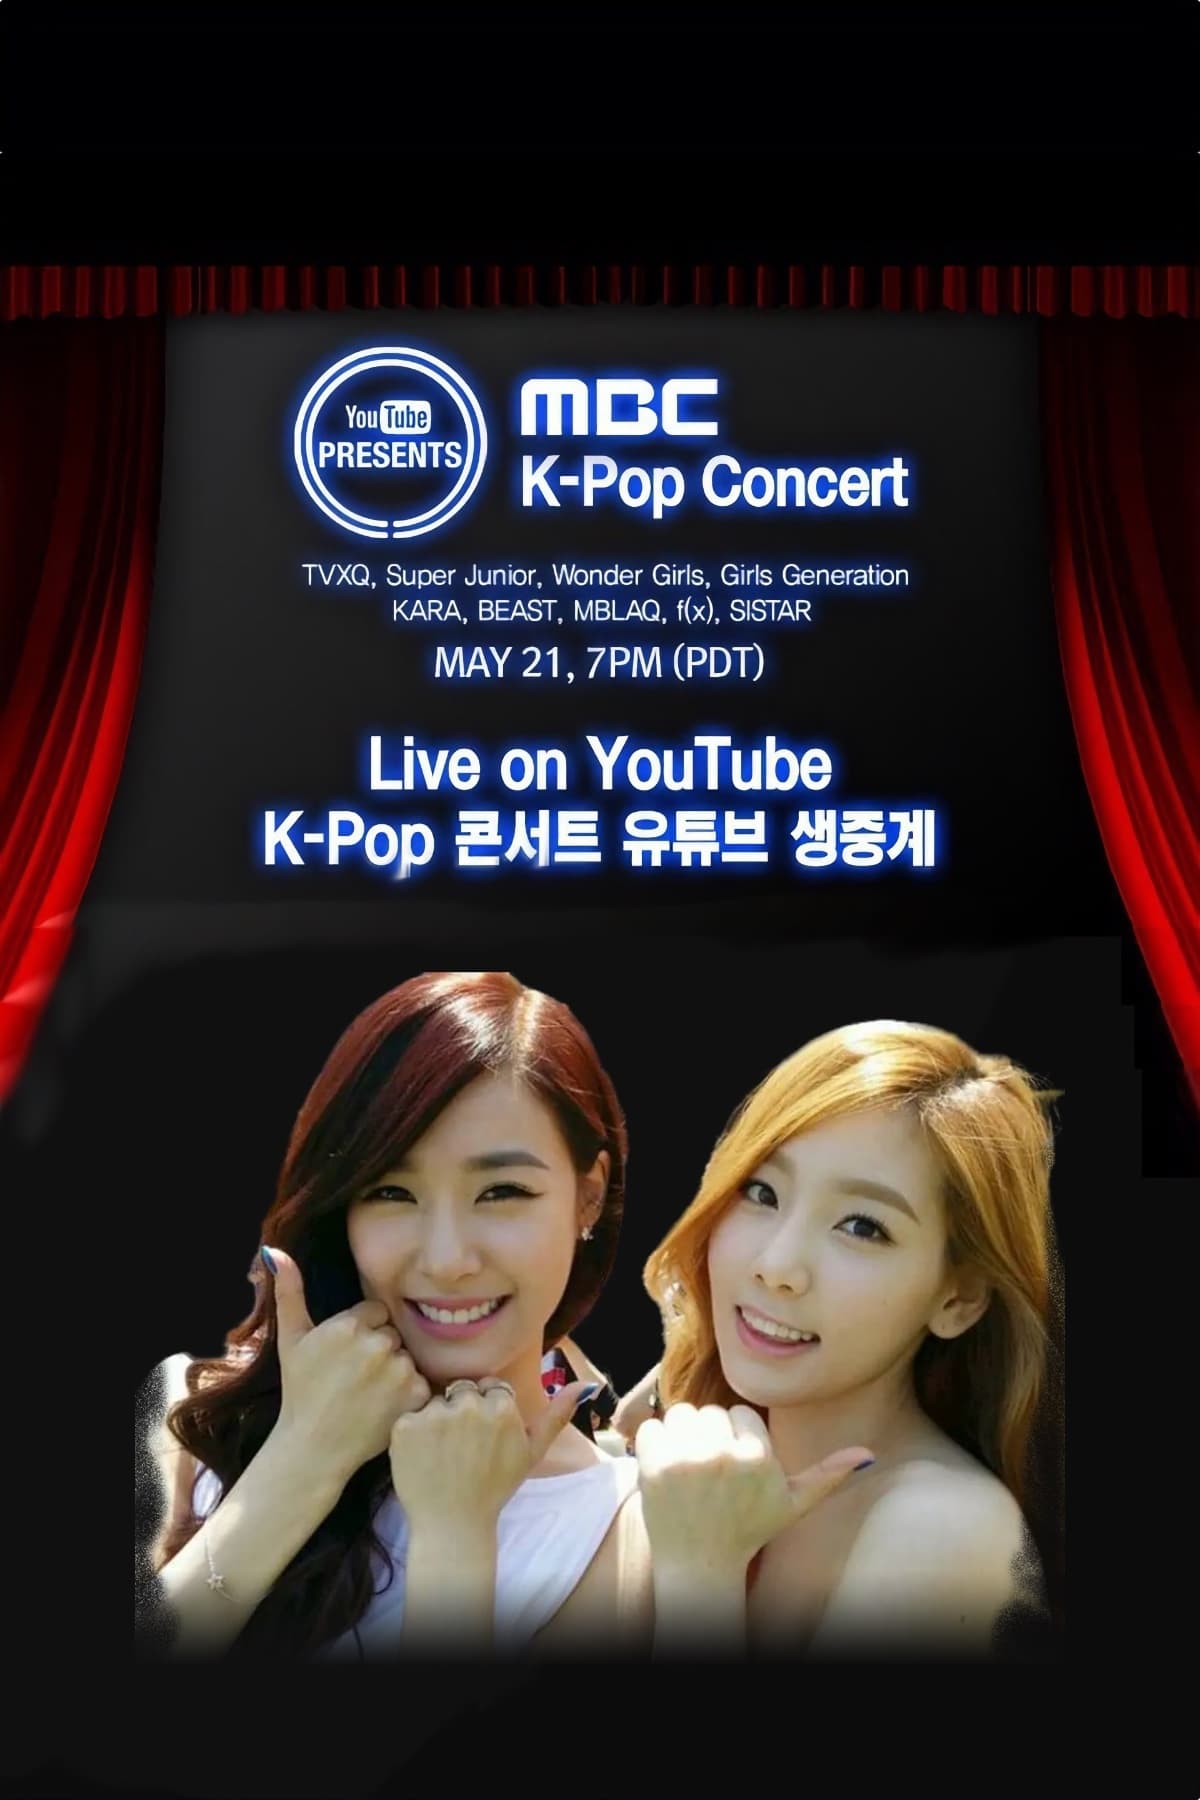 YouTube Presents MBC K-Pop Concert 2012